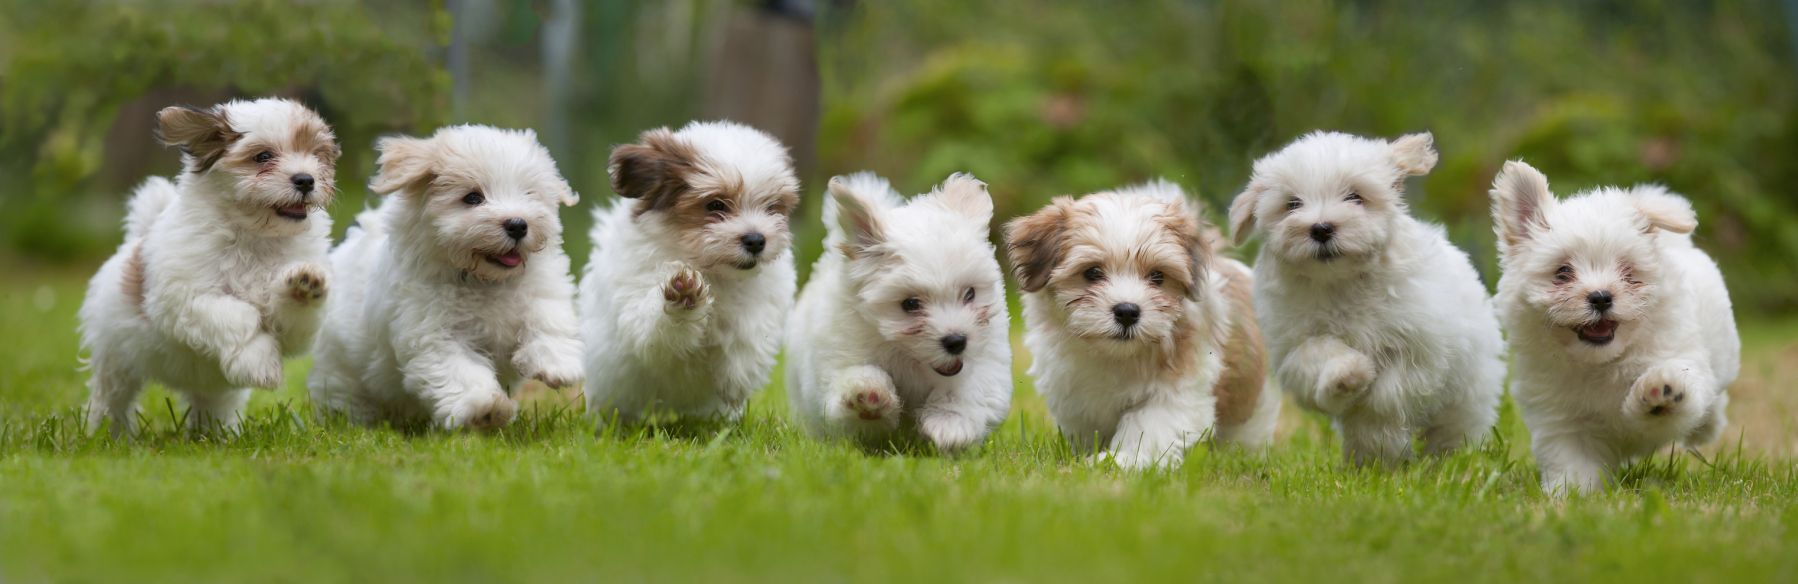 cutest smallest puppies